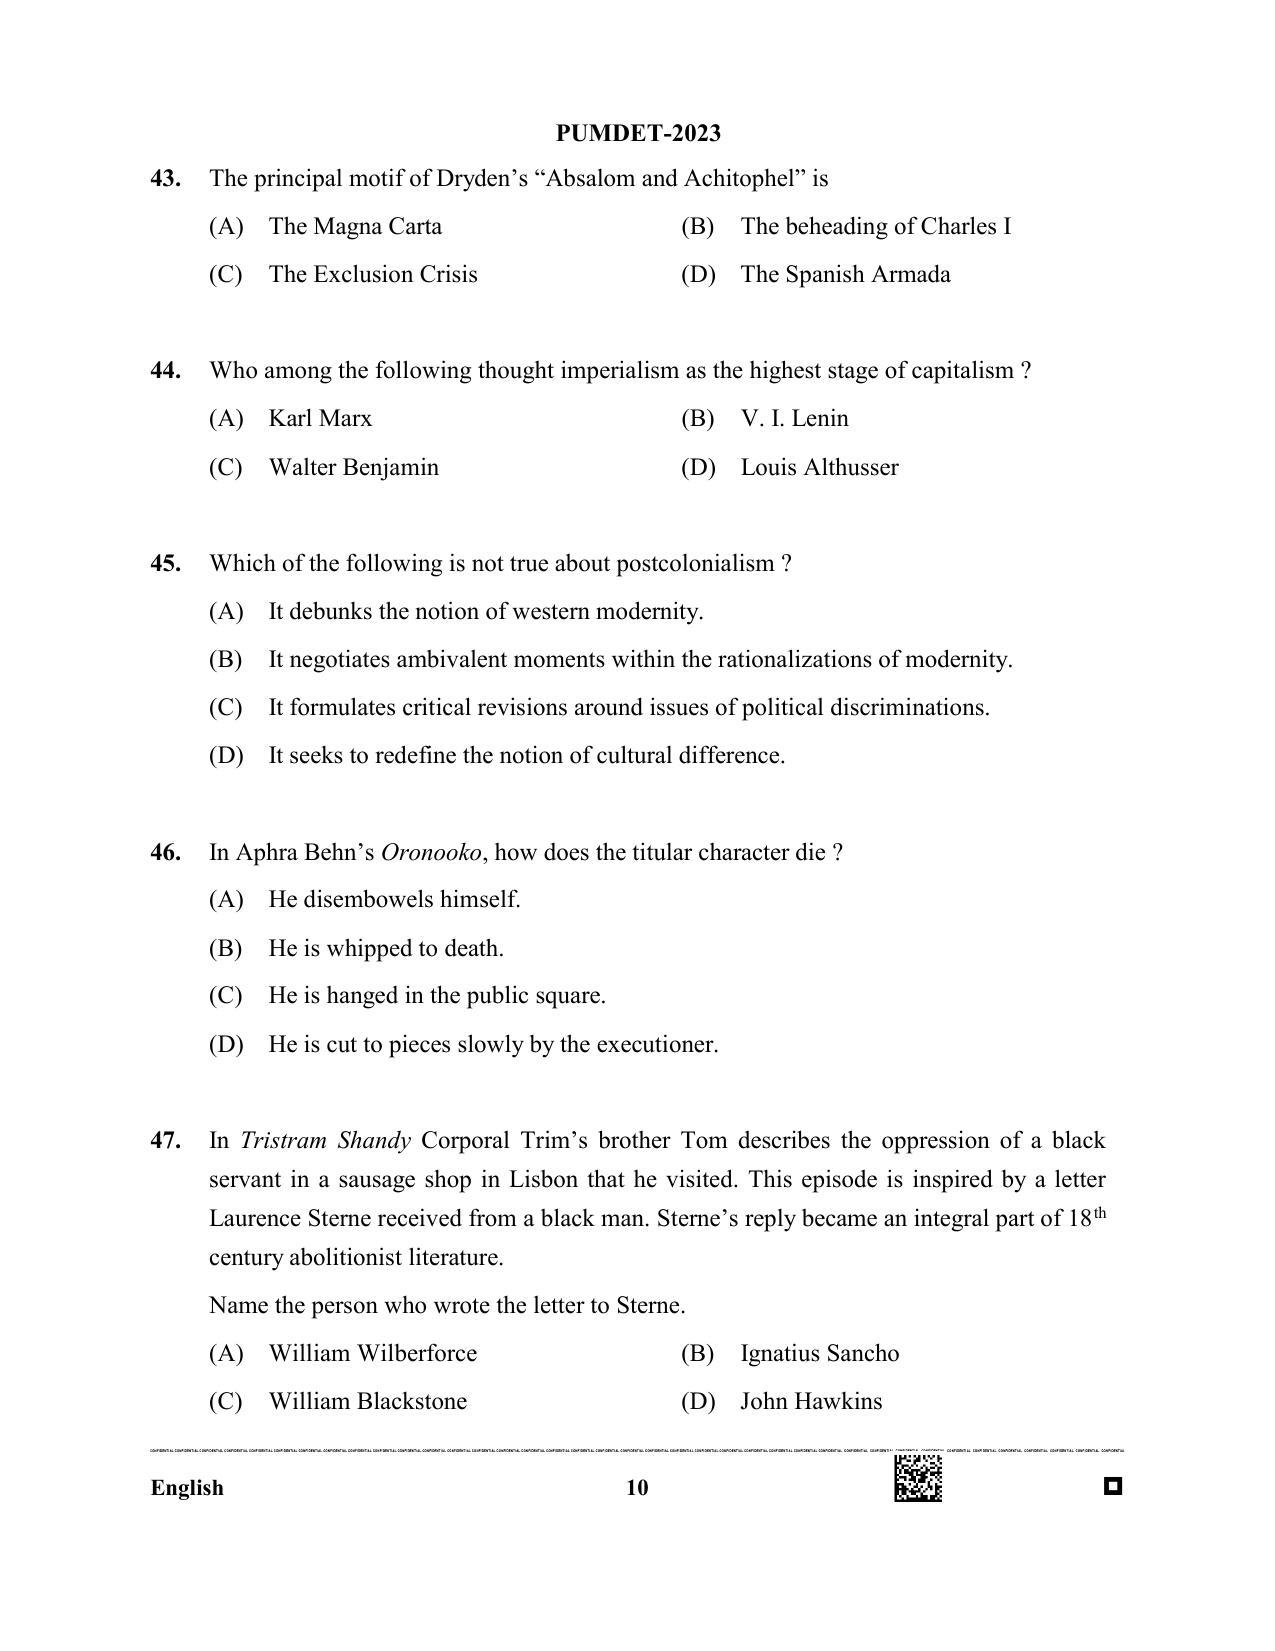 PUBDET 2023 English Question Paper - Page 10